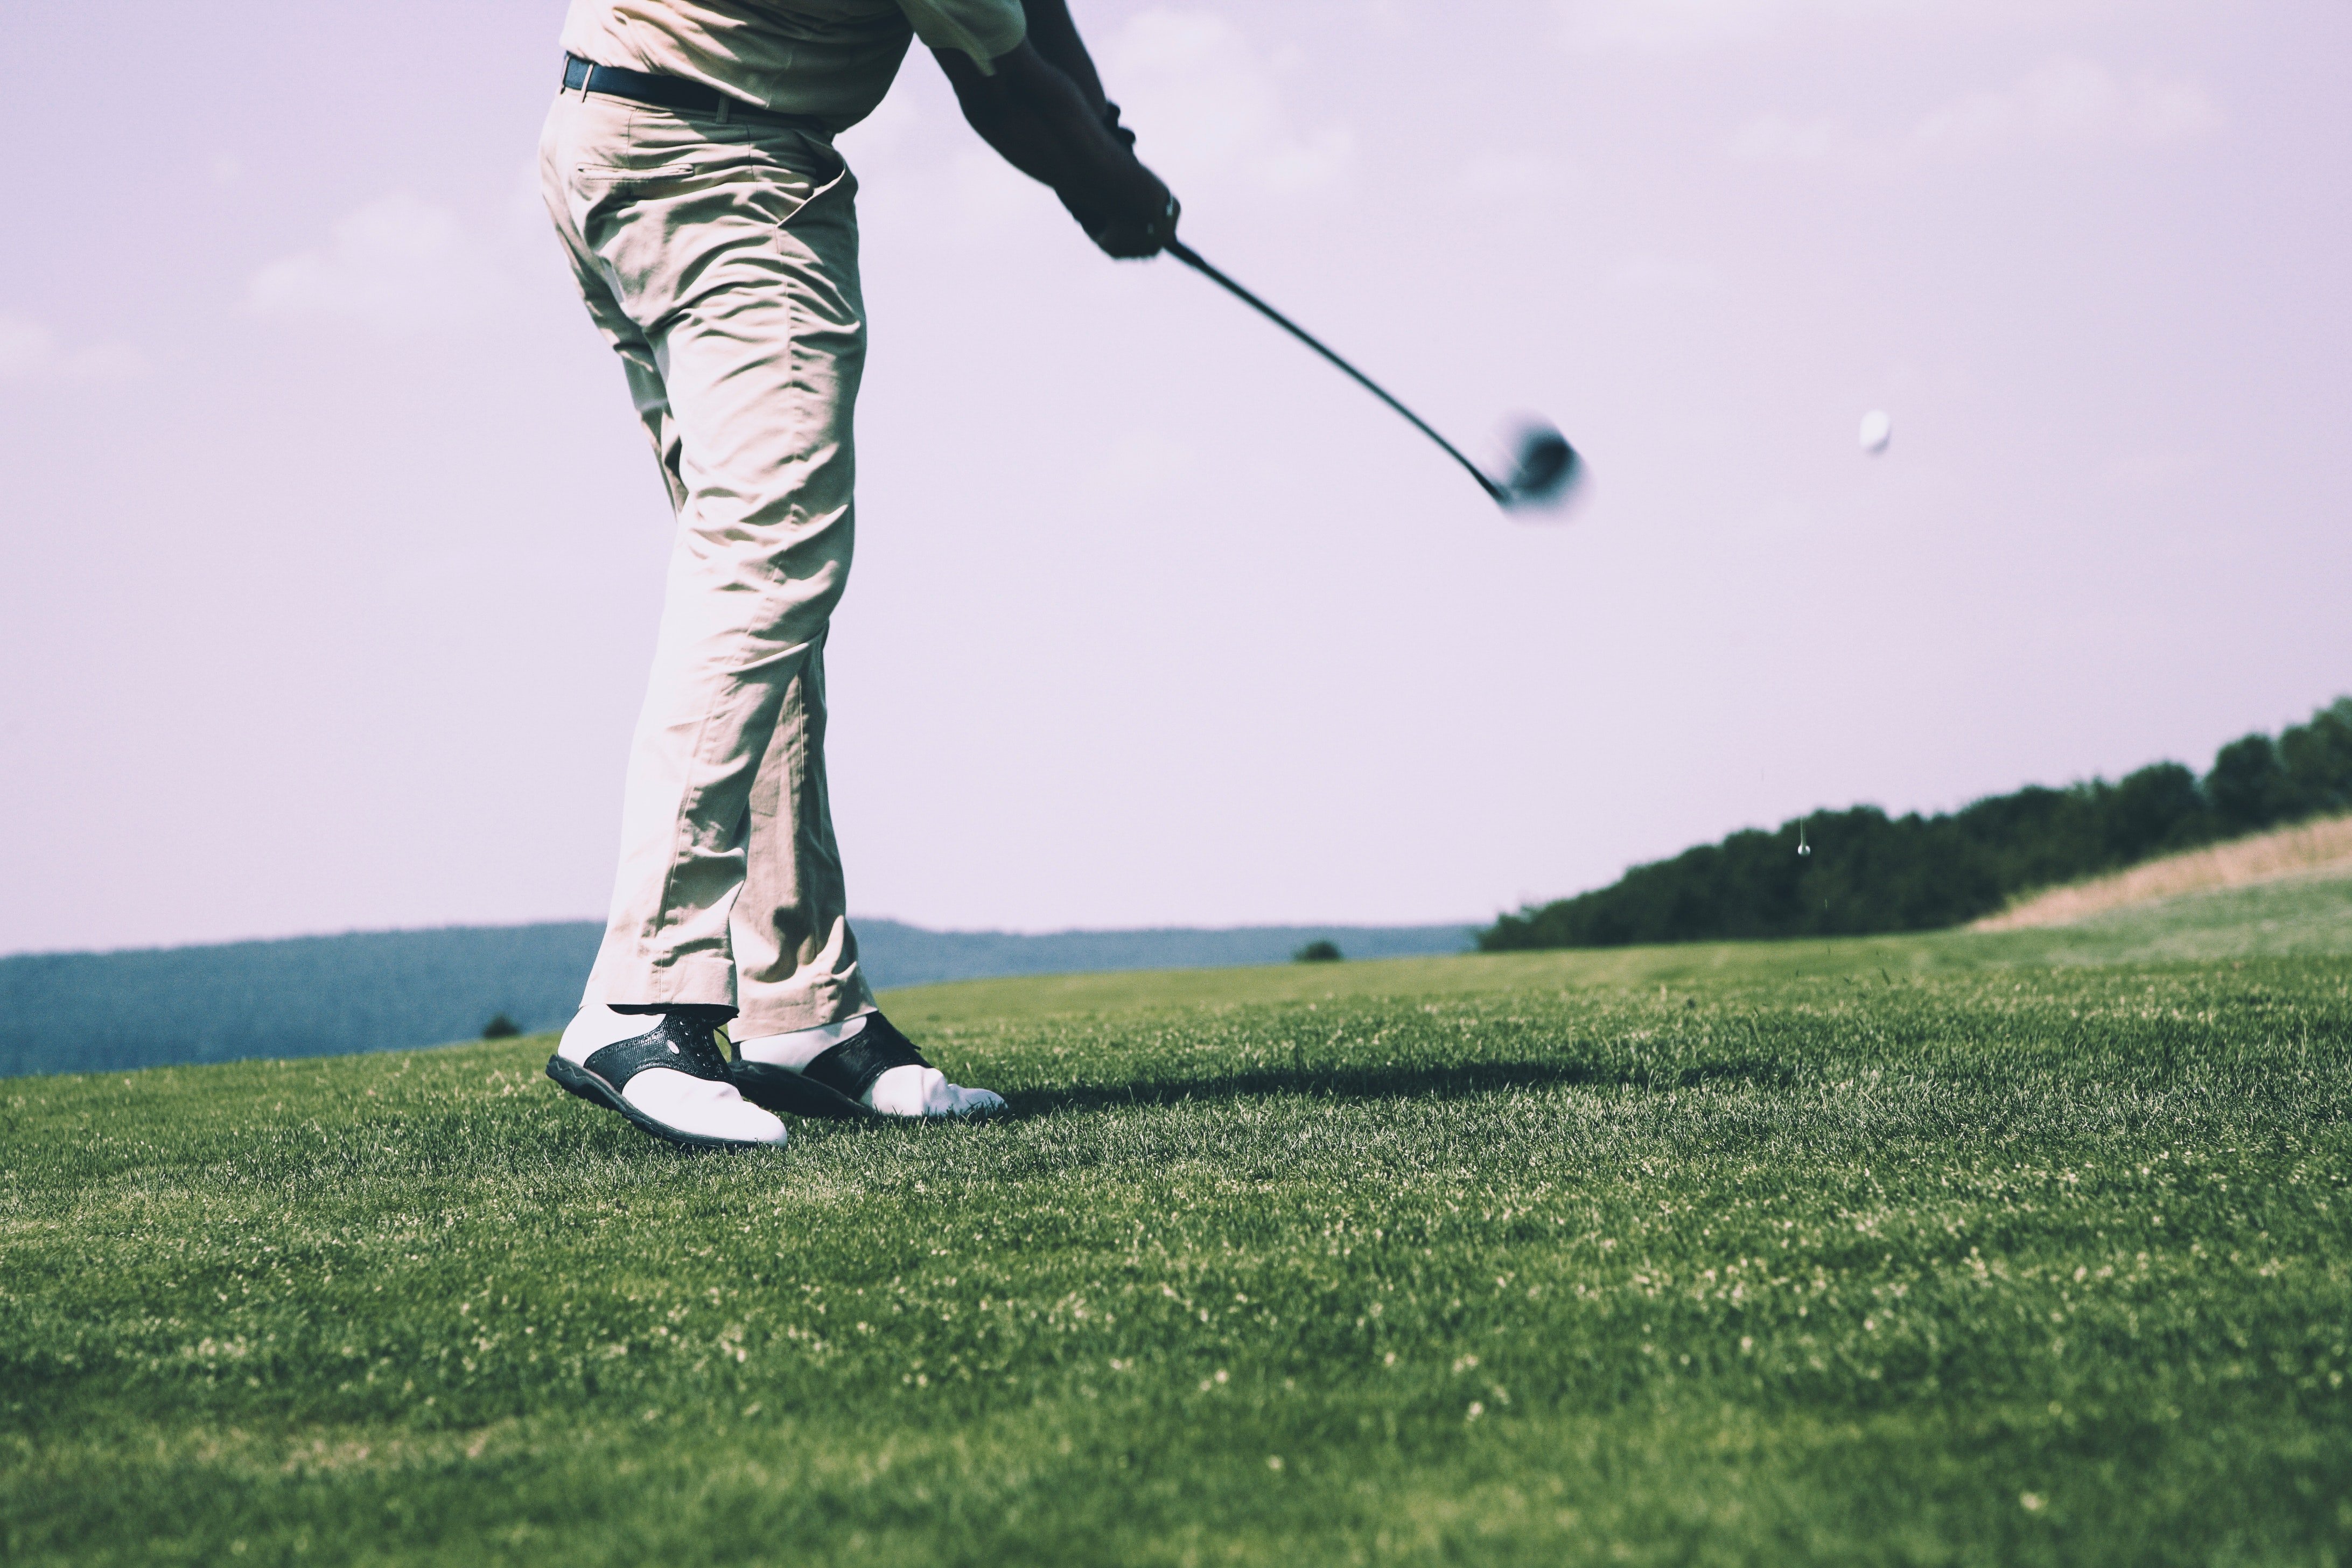 Man playing golf. | Source: Pexels/MarkusSpiske